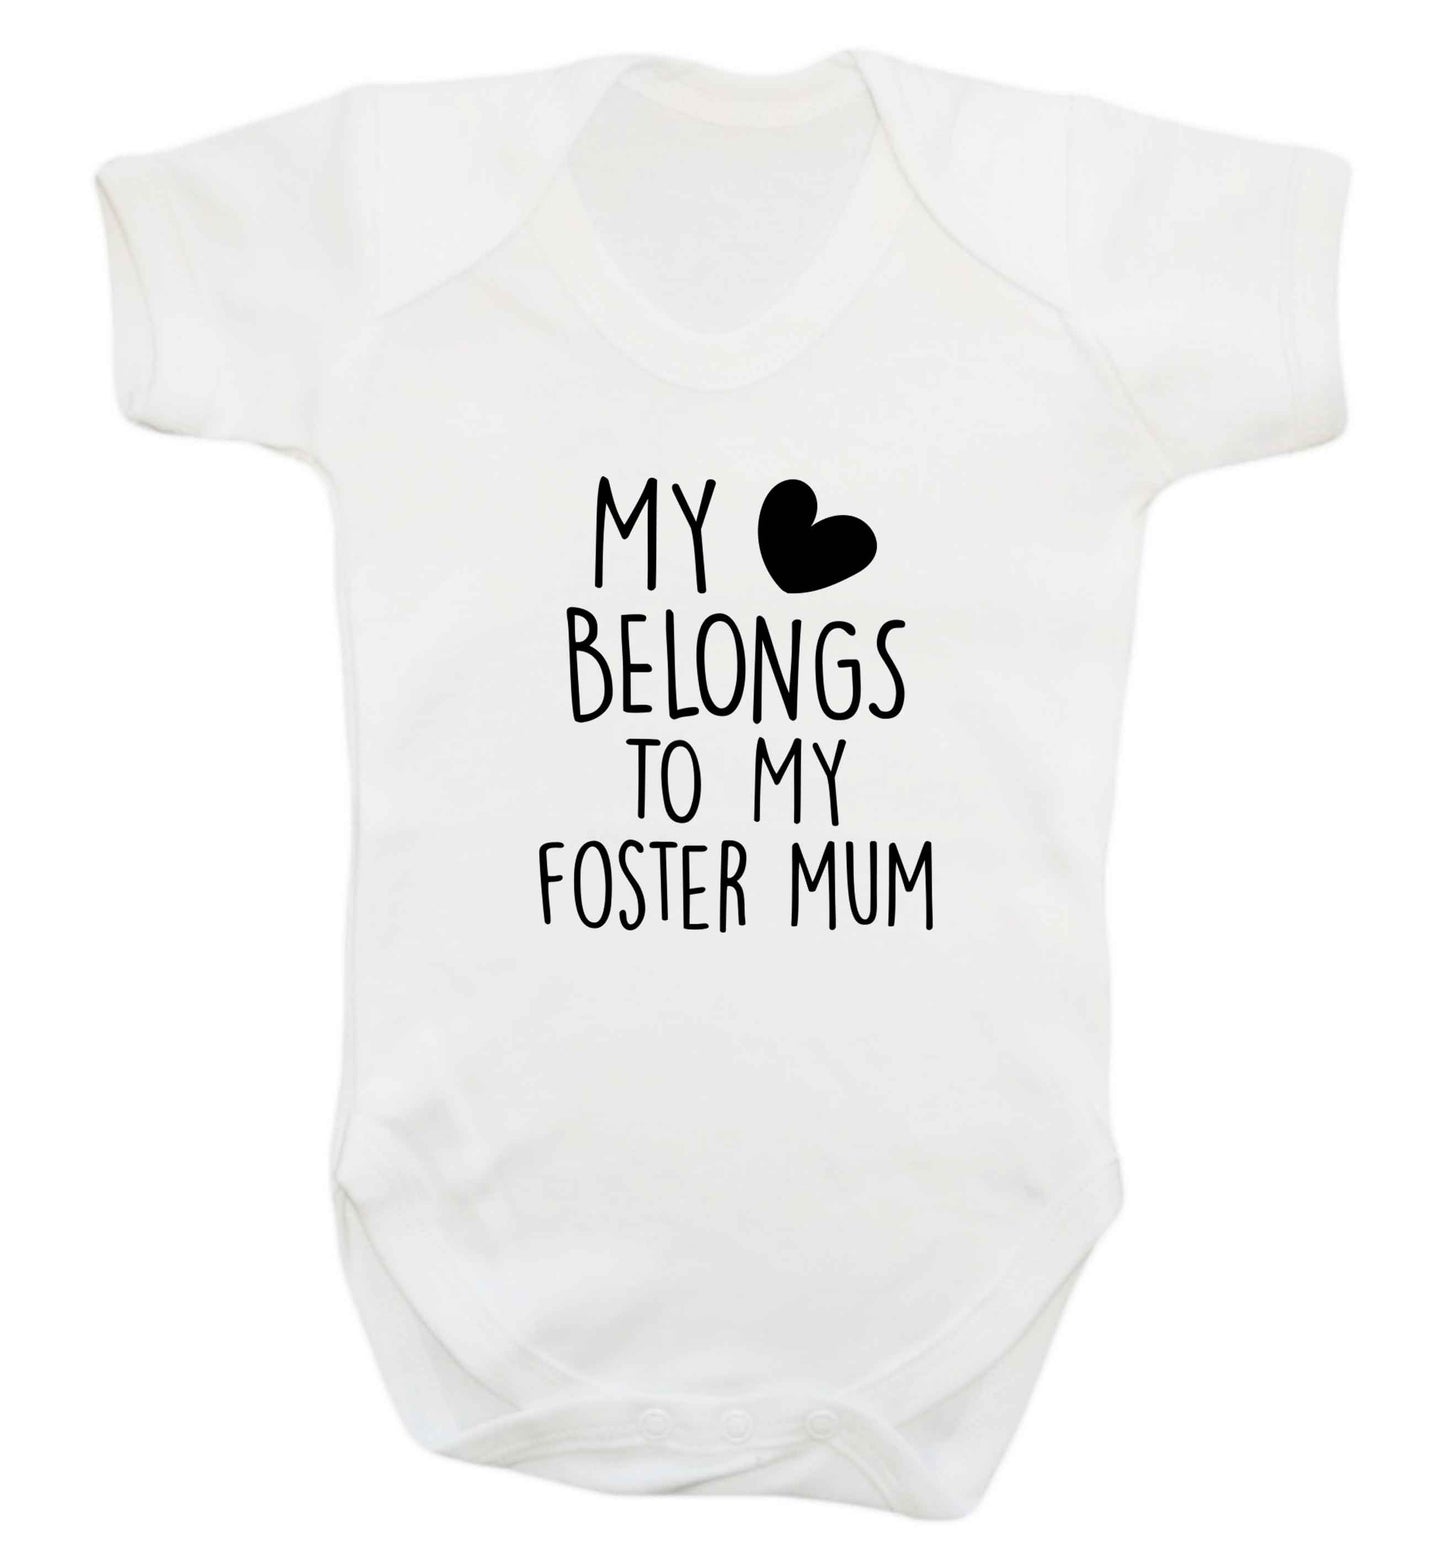 My heart belongs to my foster mum baby vest white 18-24 months